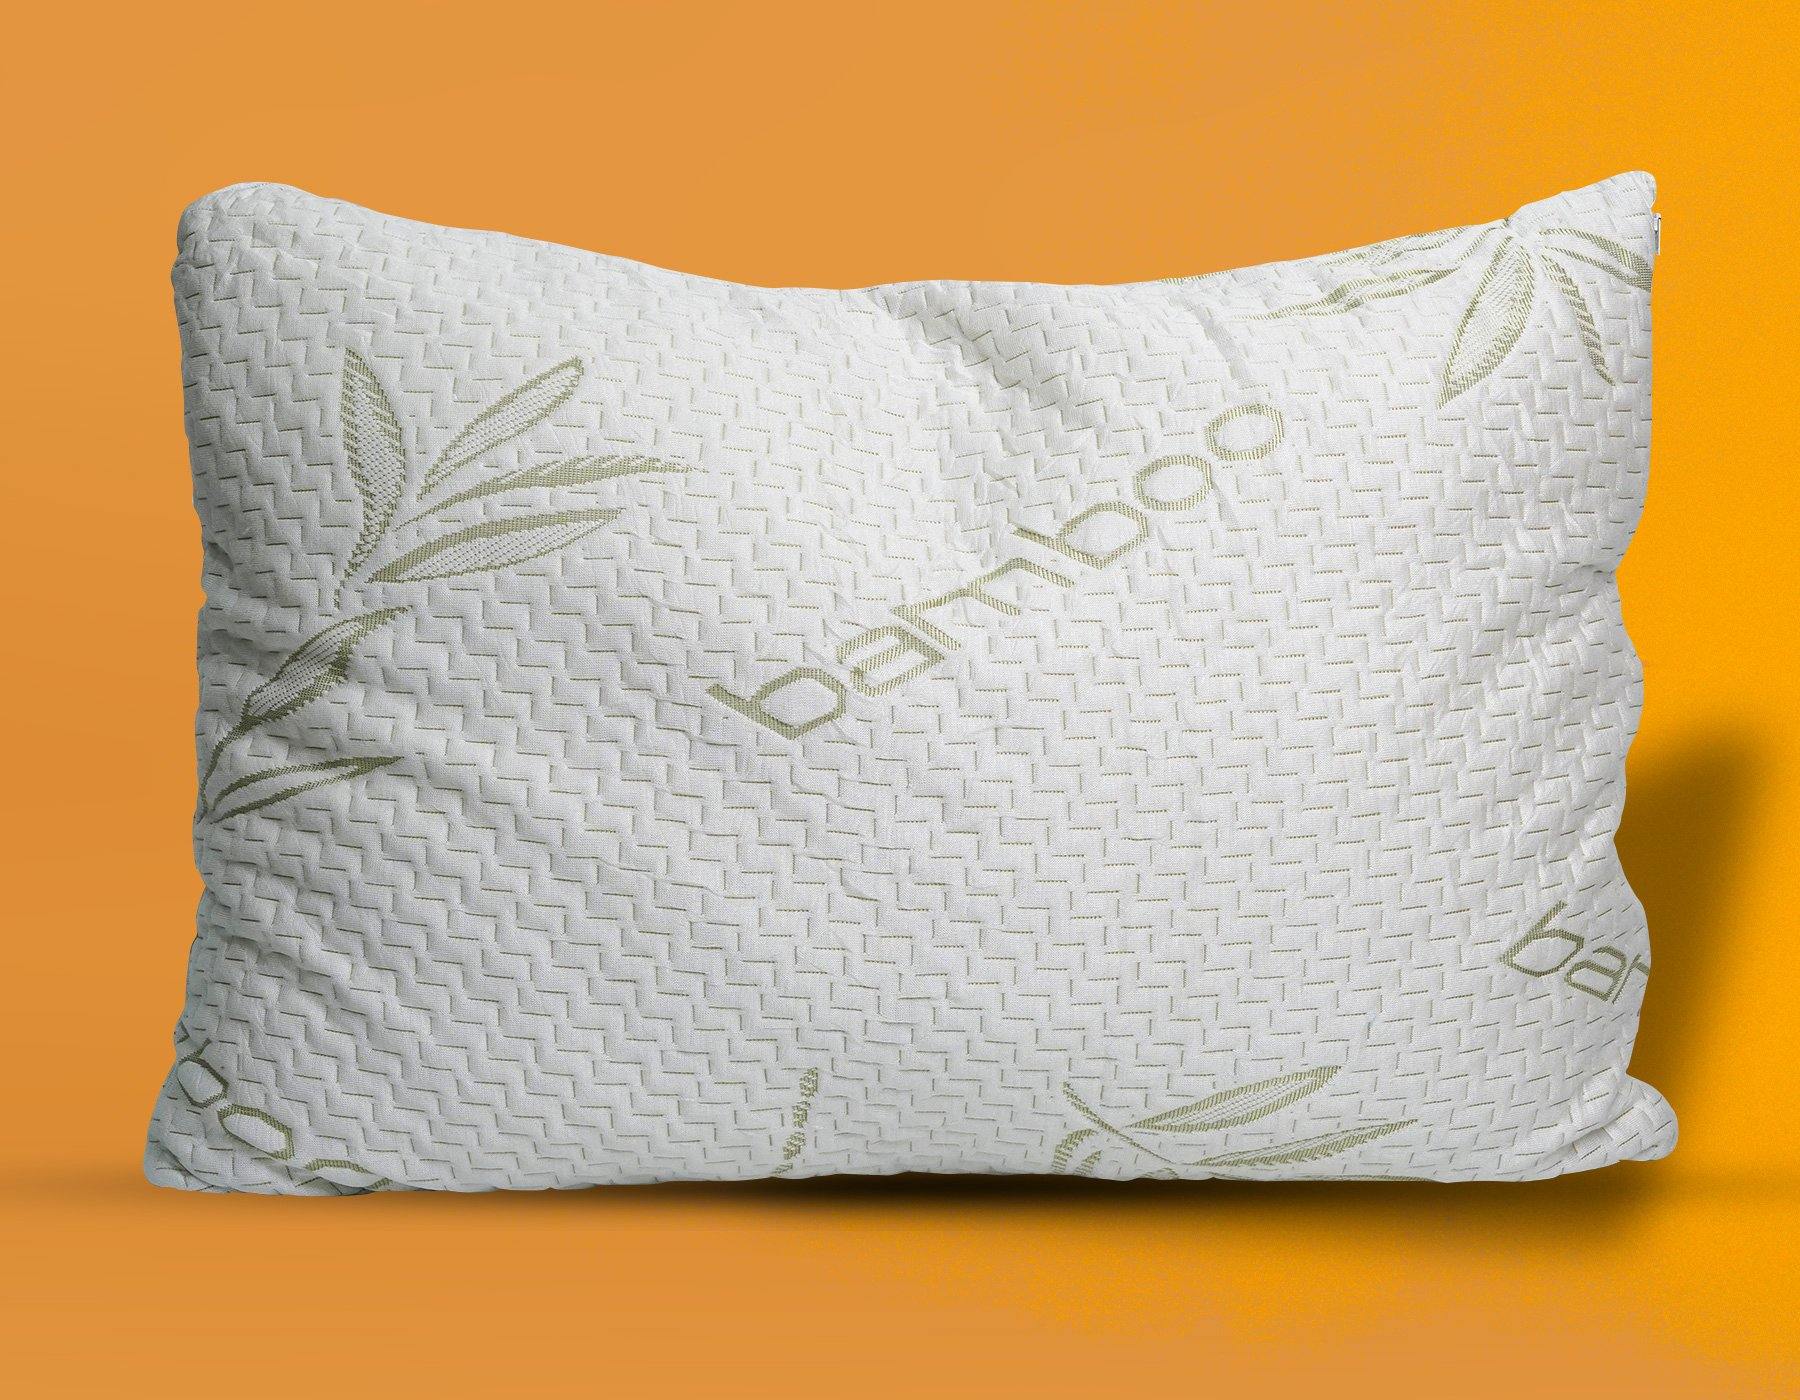 ASMILITY 2 Pack Shredded Memory Foam Bed Pillows for Sleeping Adjustab